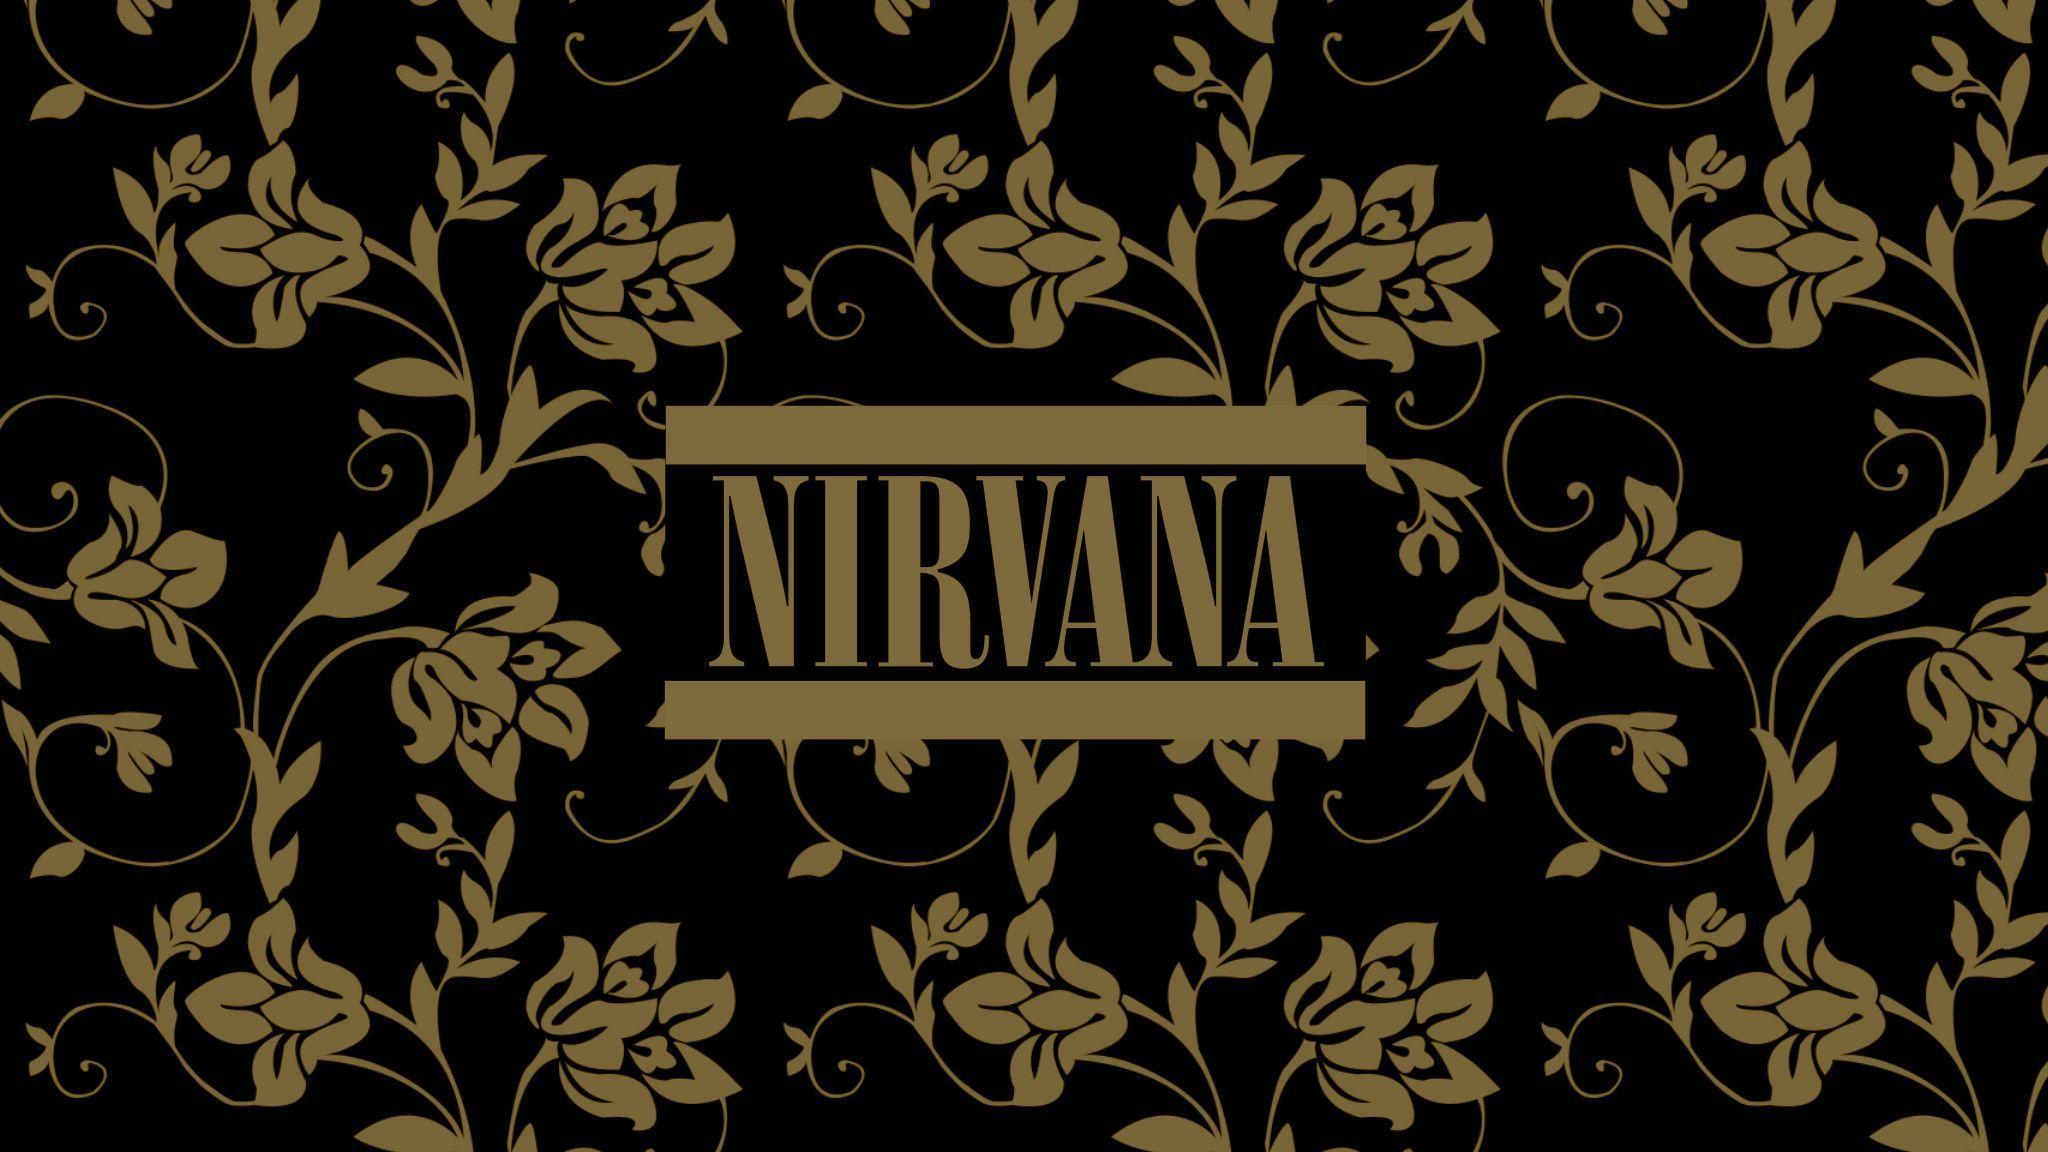 Nirvana: \